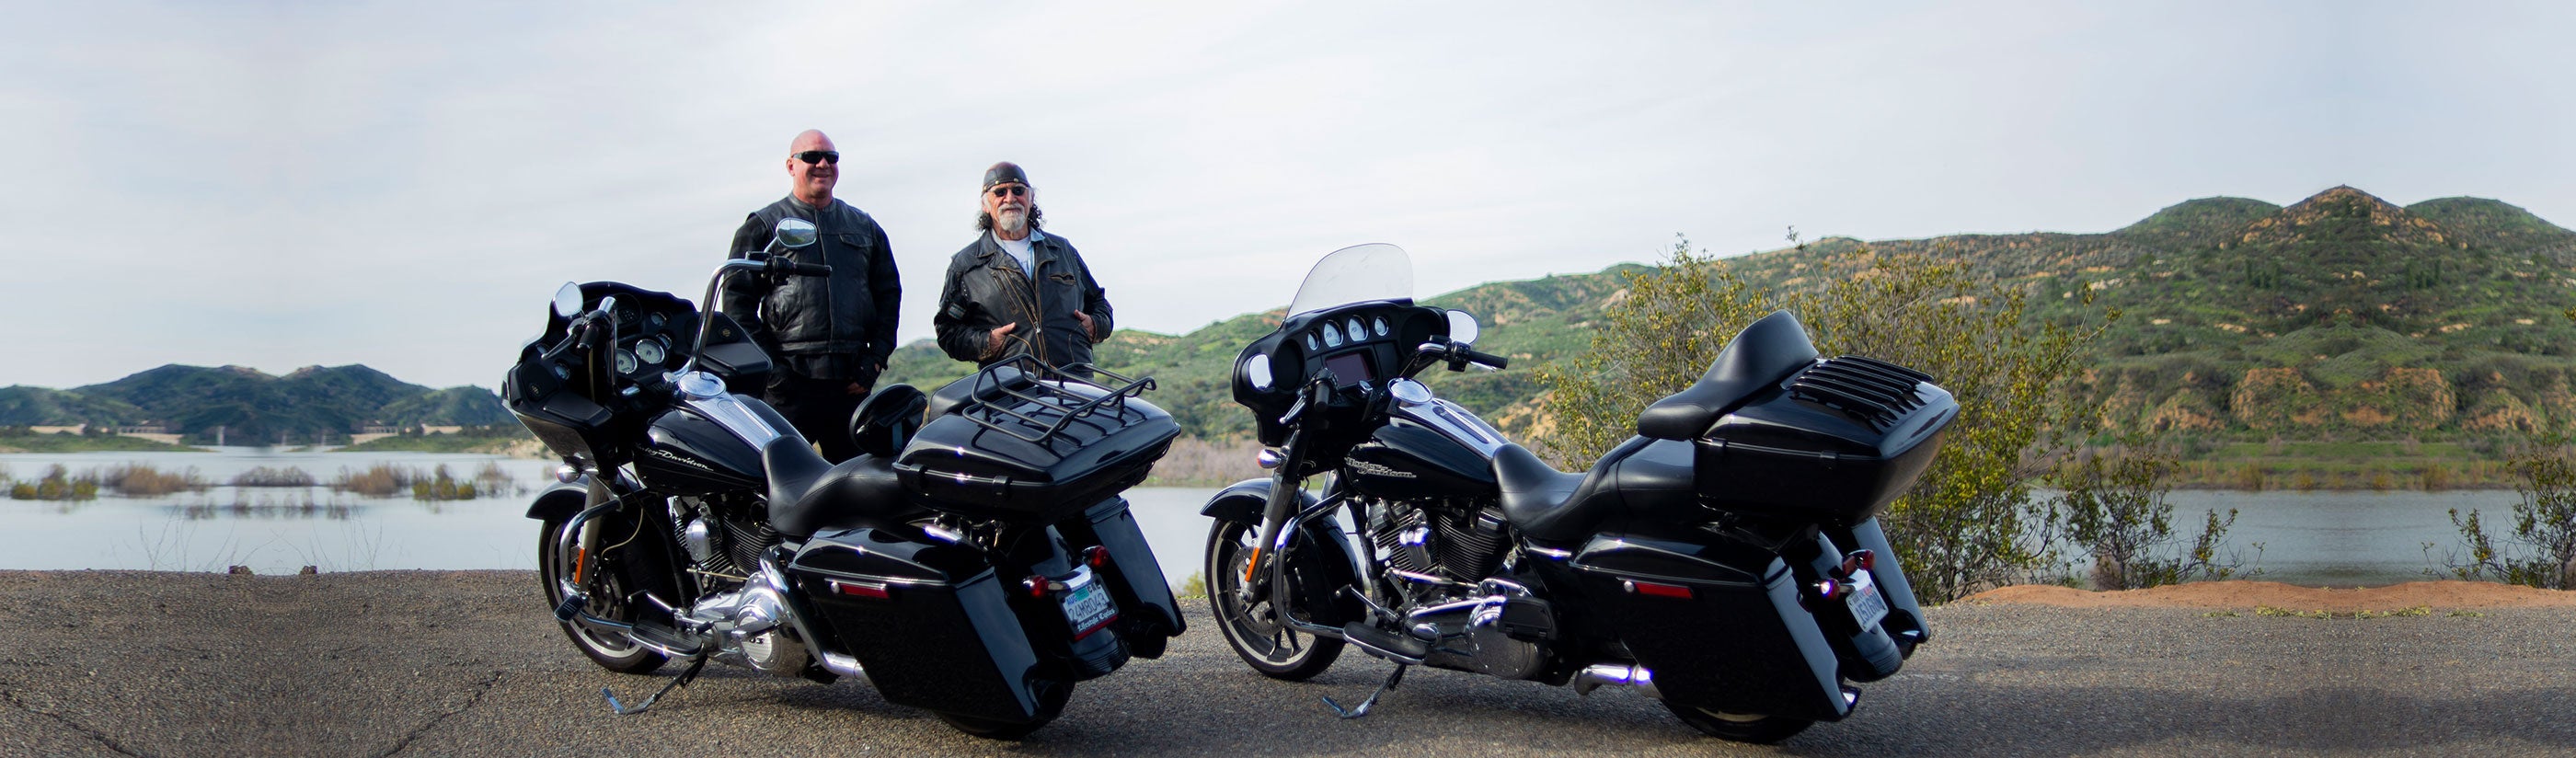 Harley Touring Road King Bagger Extended Saddlebags